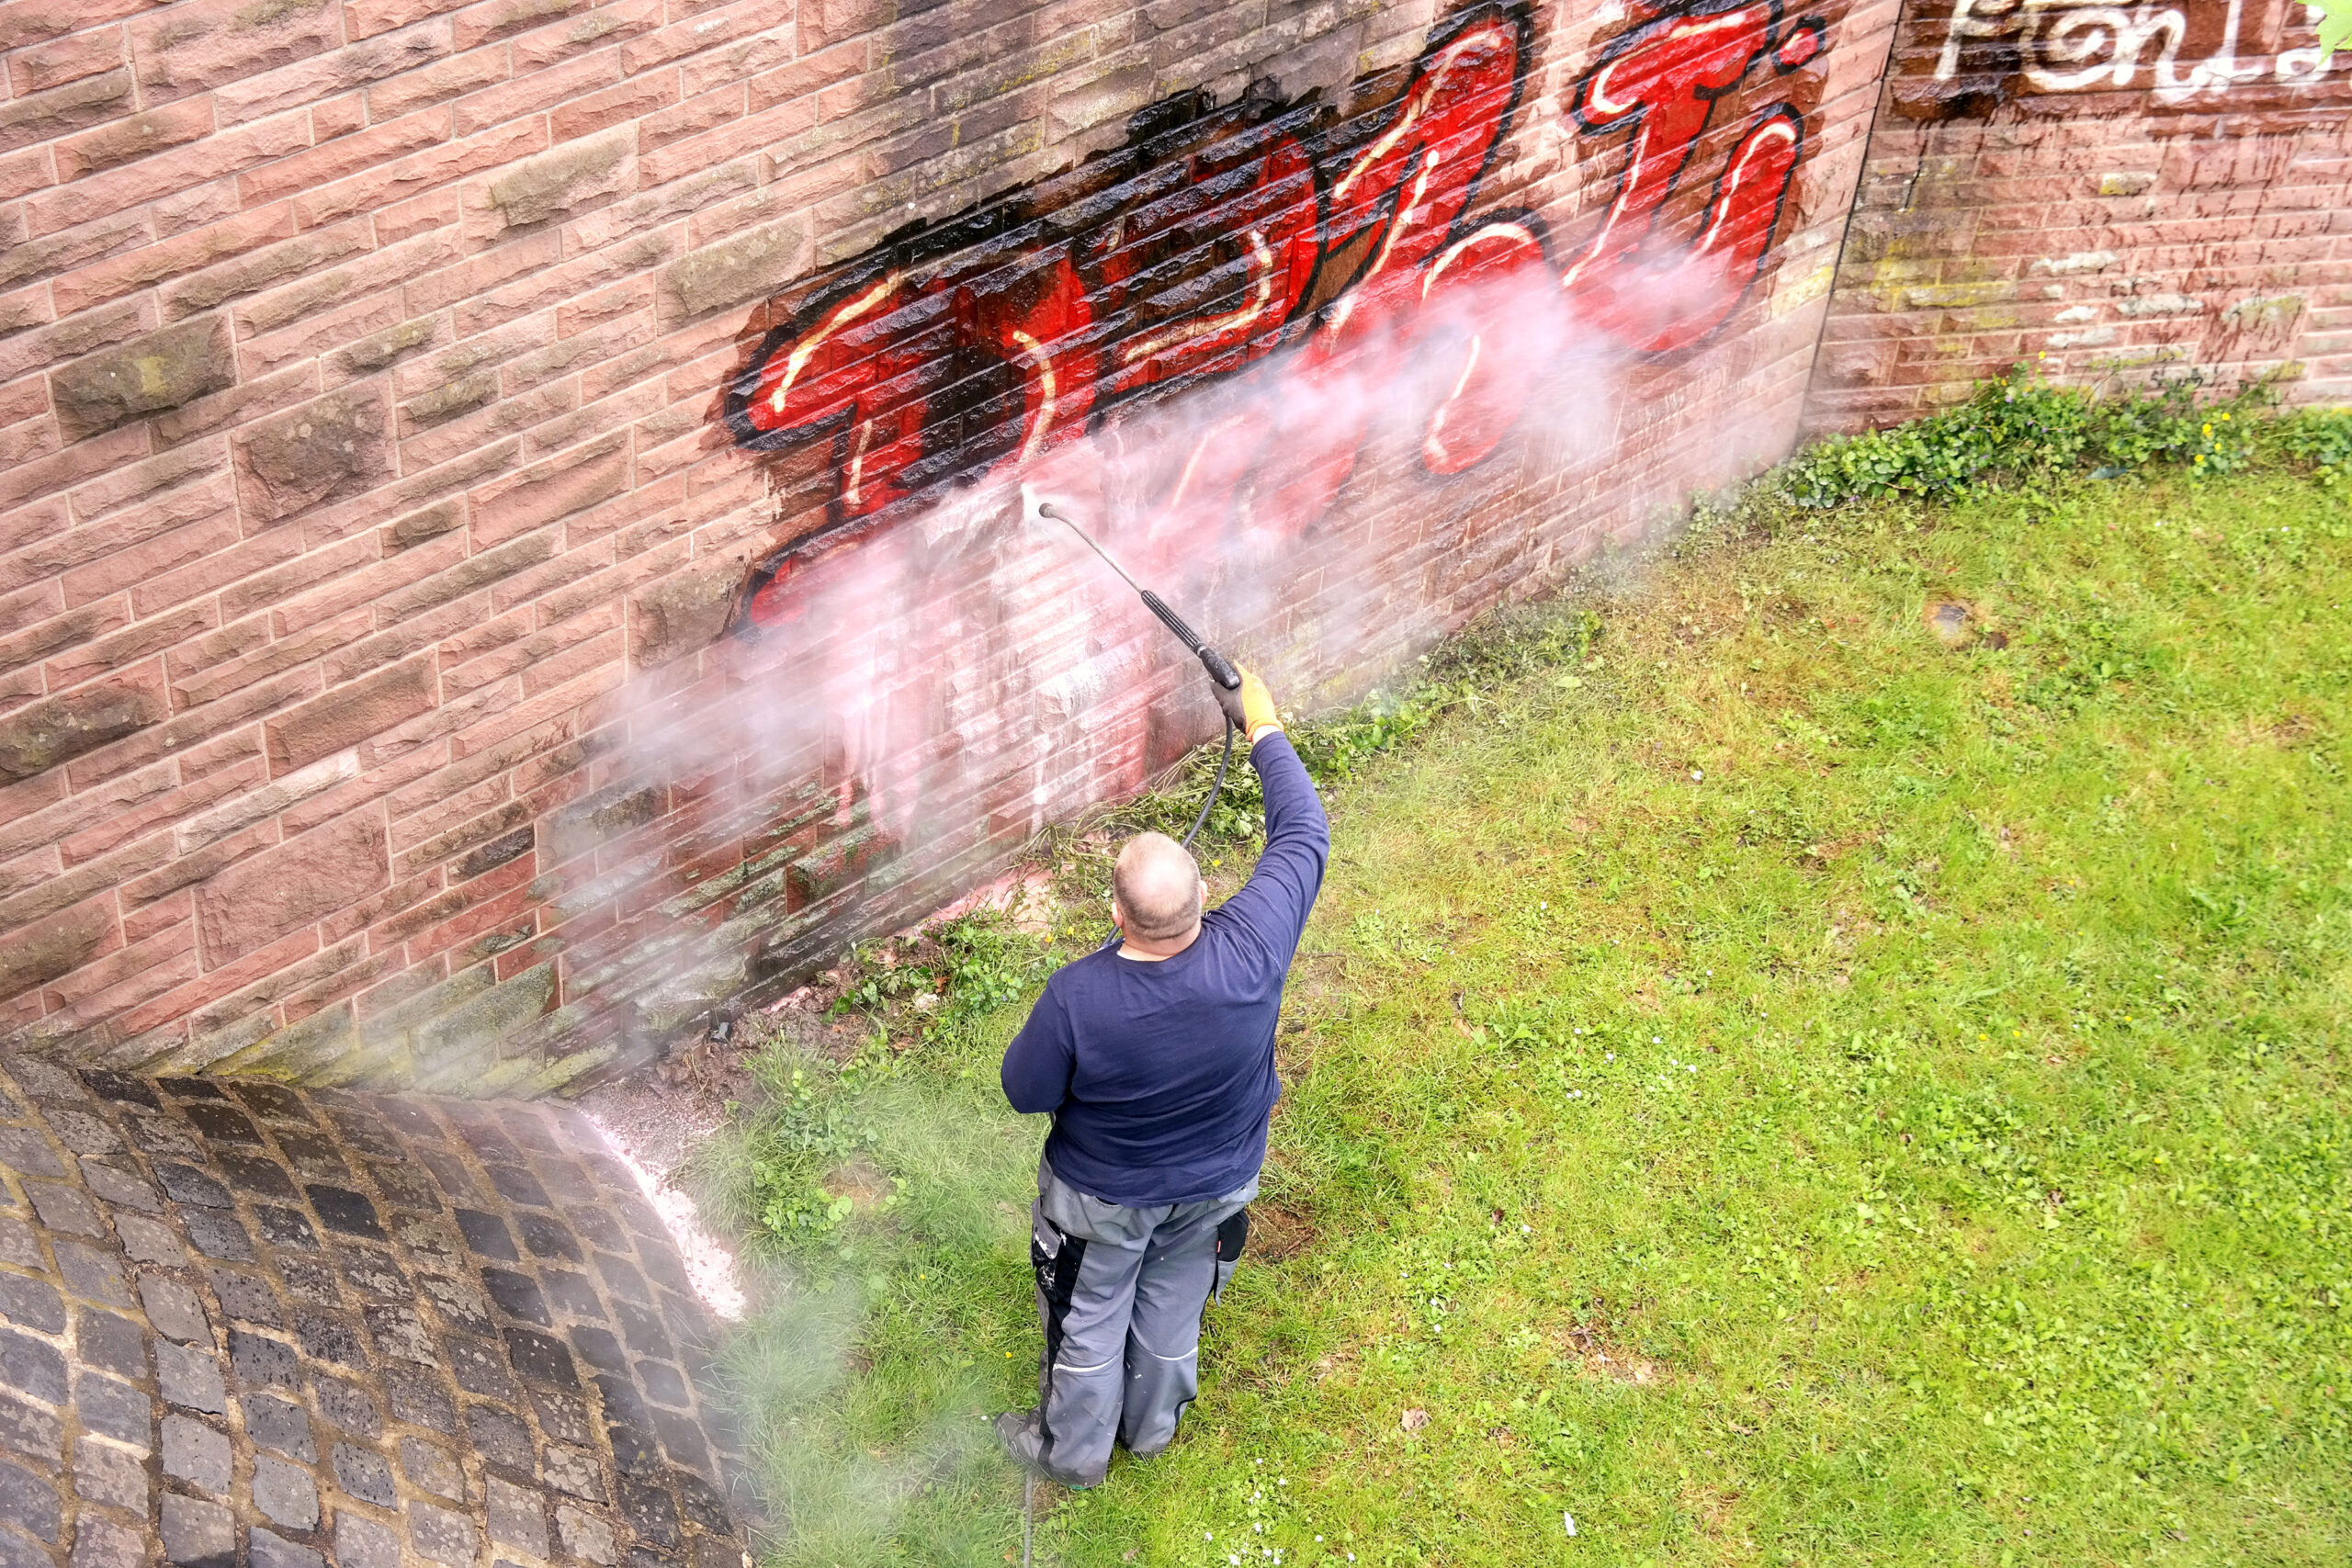 GERMANY, FRANKFURT AM MAIN - May 07.2014 : Worker of municipal service of city cleans a wall from graffiti. Remove Graffiti